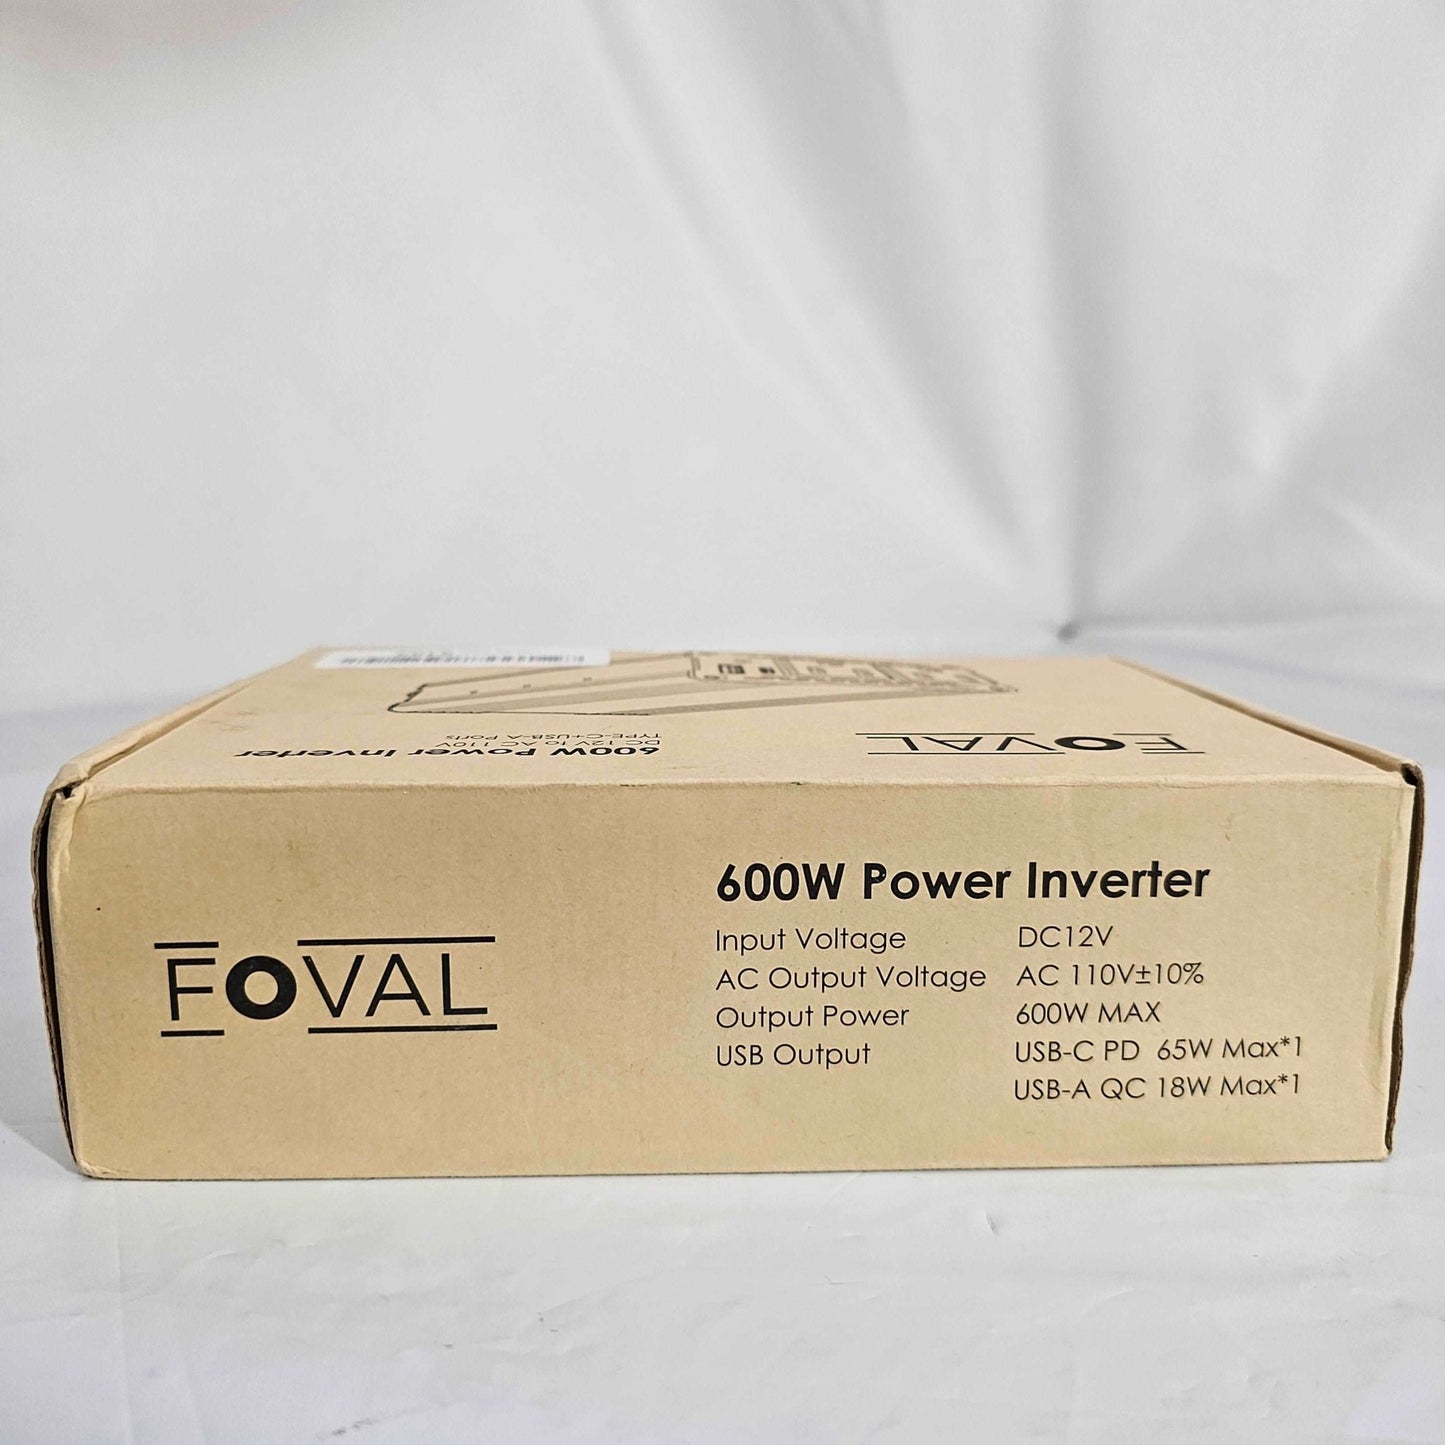 600W Power Inverter Foval - DQ Distribution